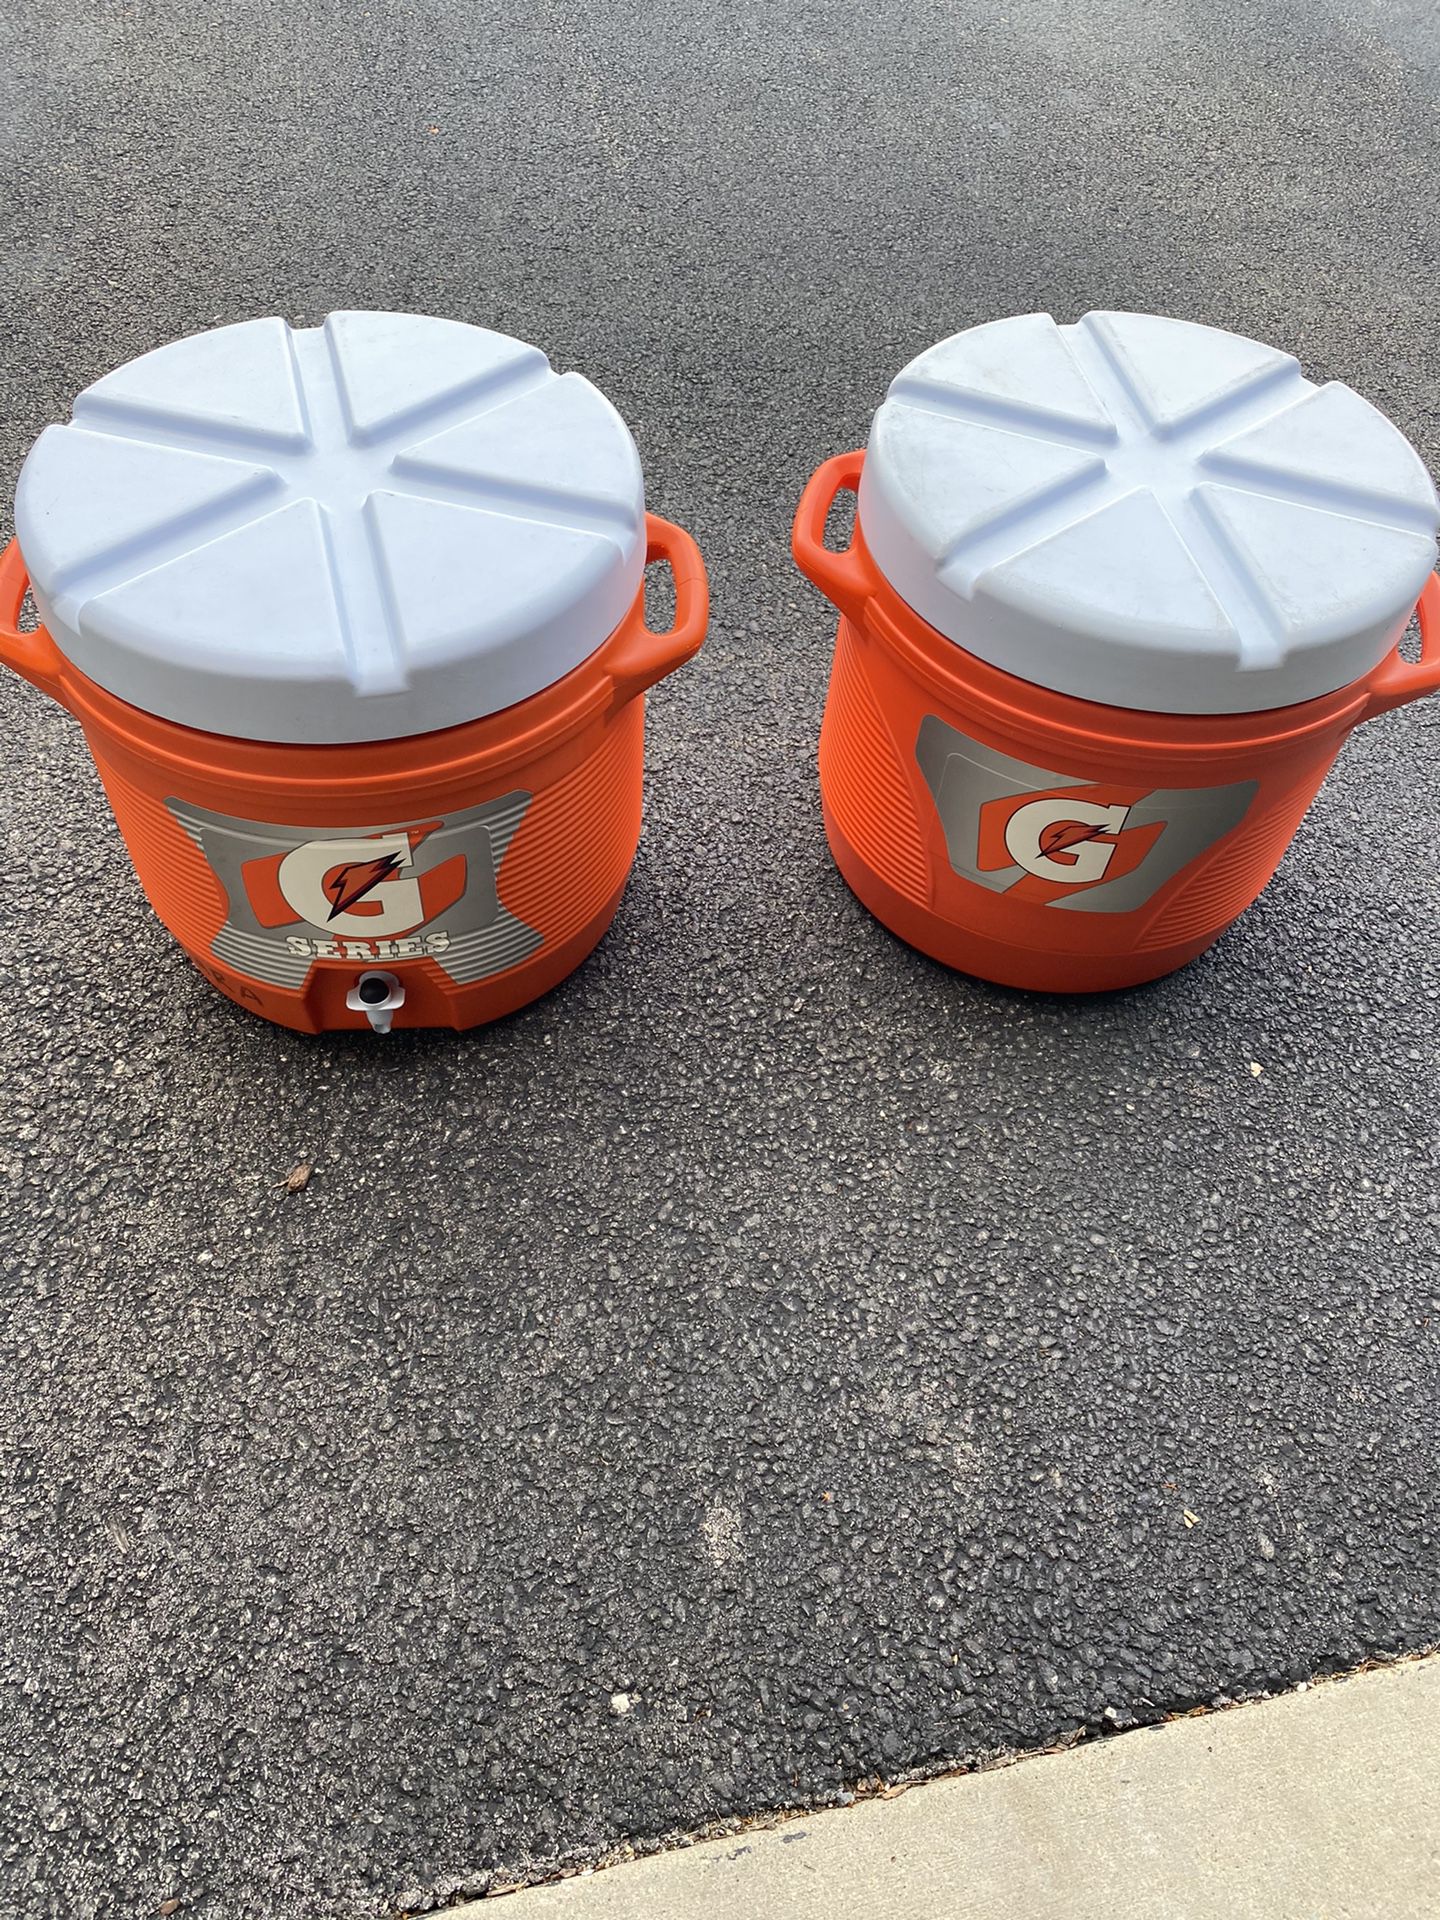 Gatorade G-Series Coolers